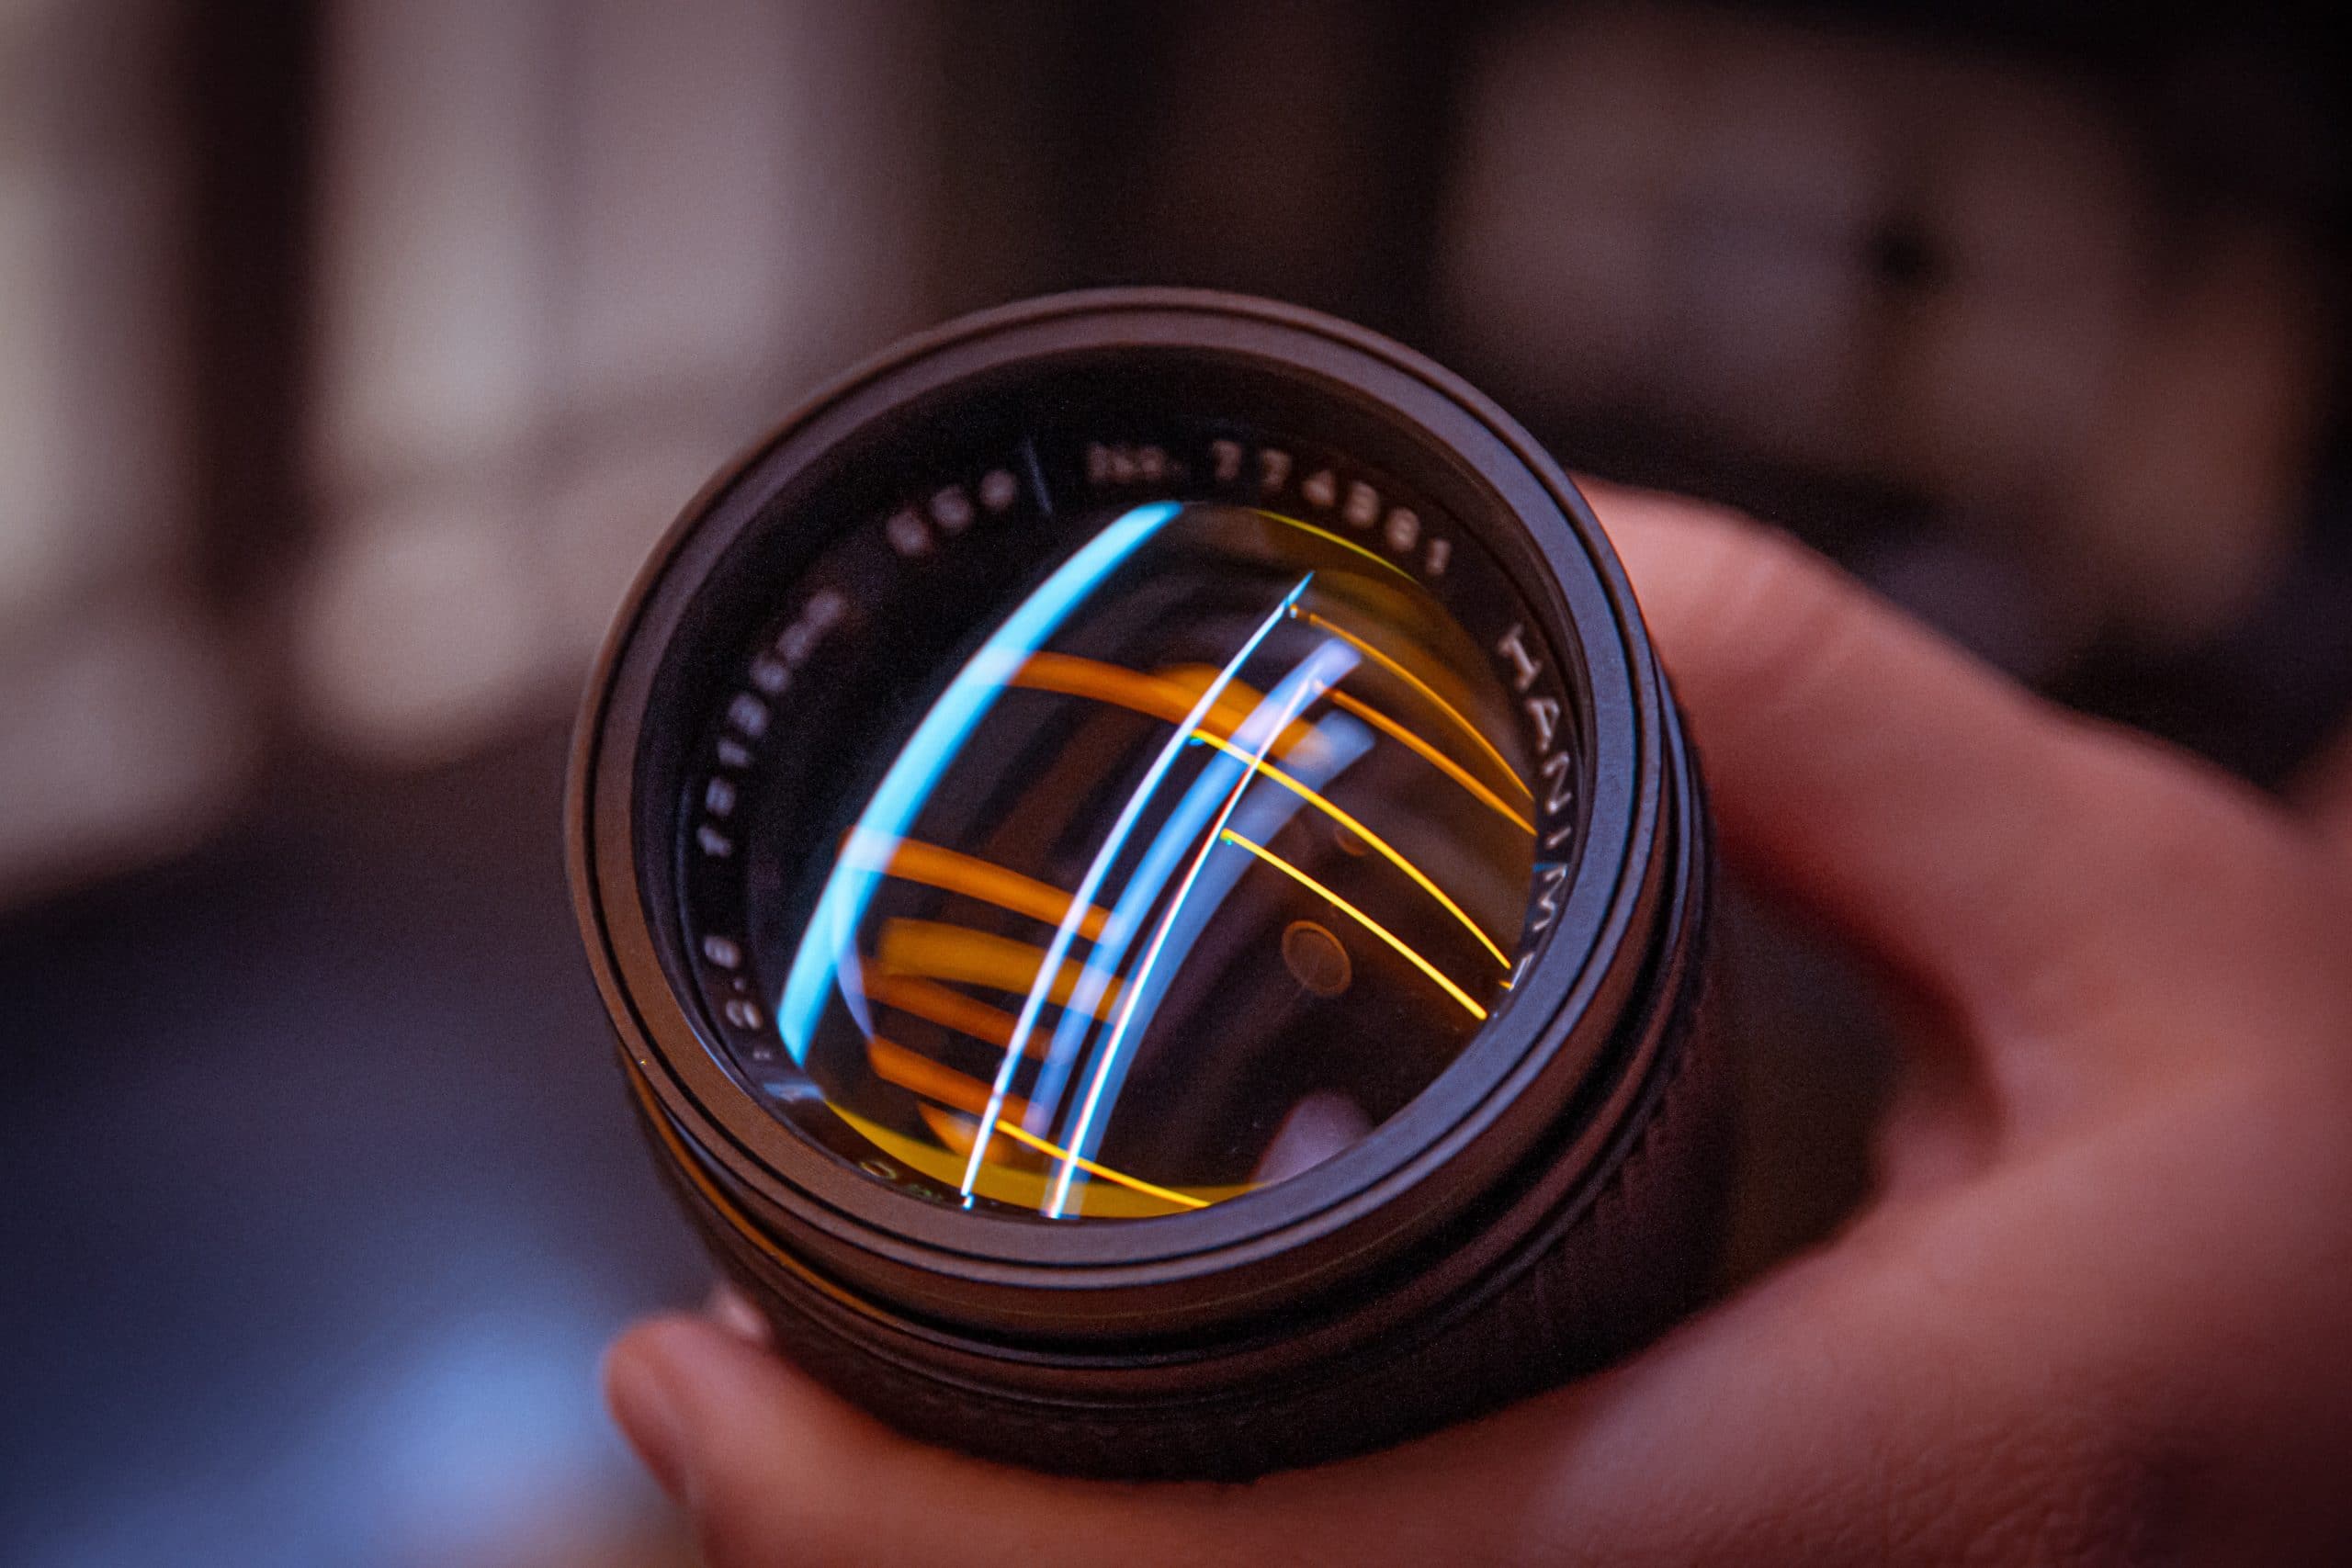 What is a Tilt-Shift Lens? - Lightroom Photoshop Tutorials